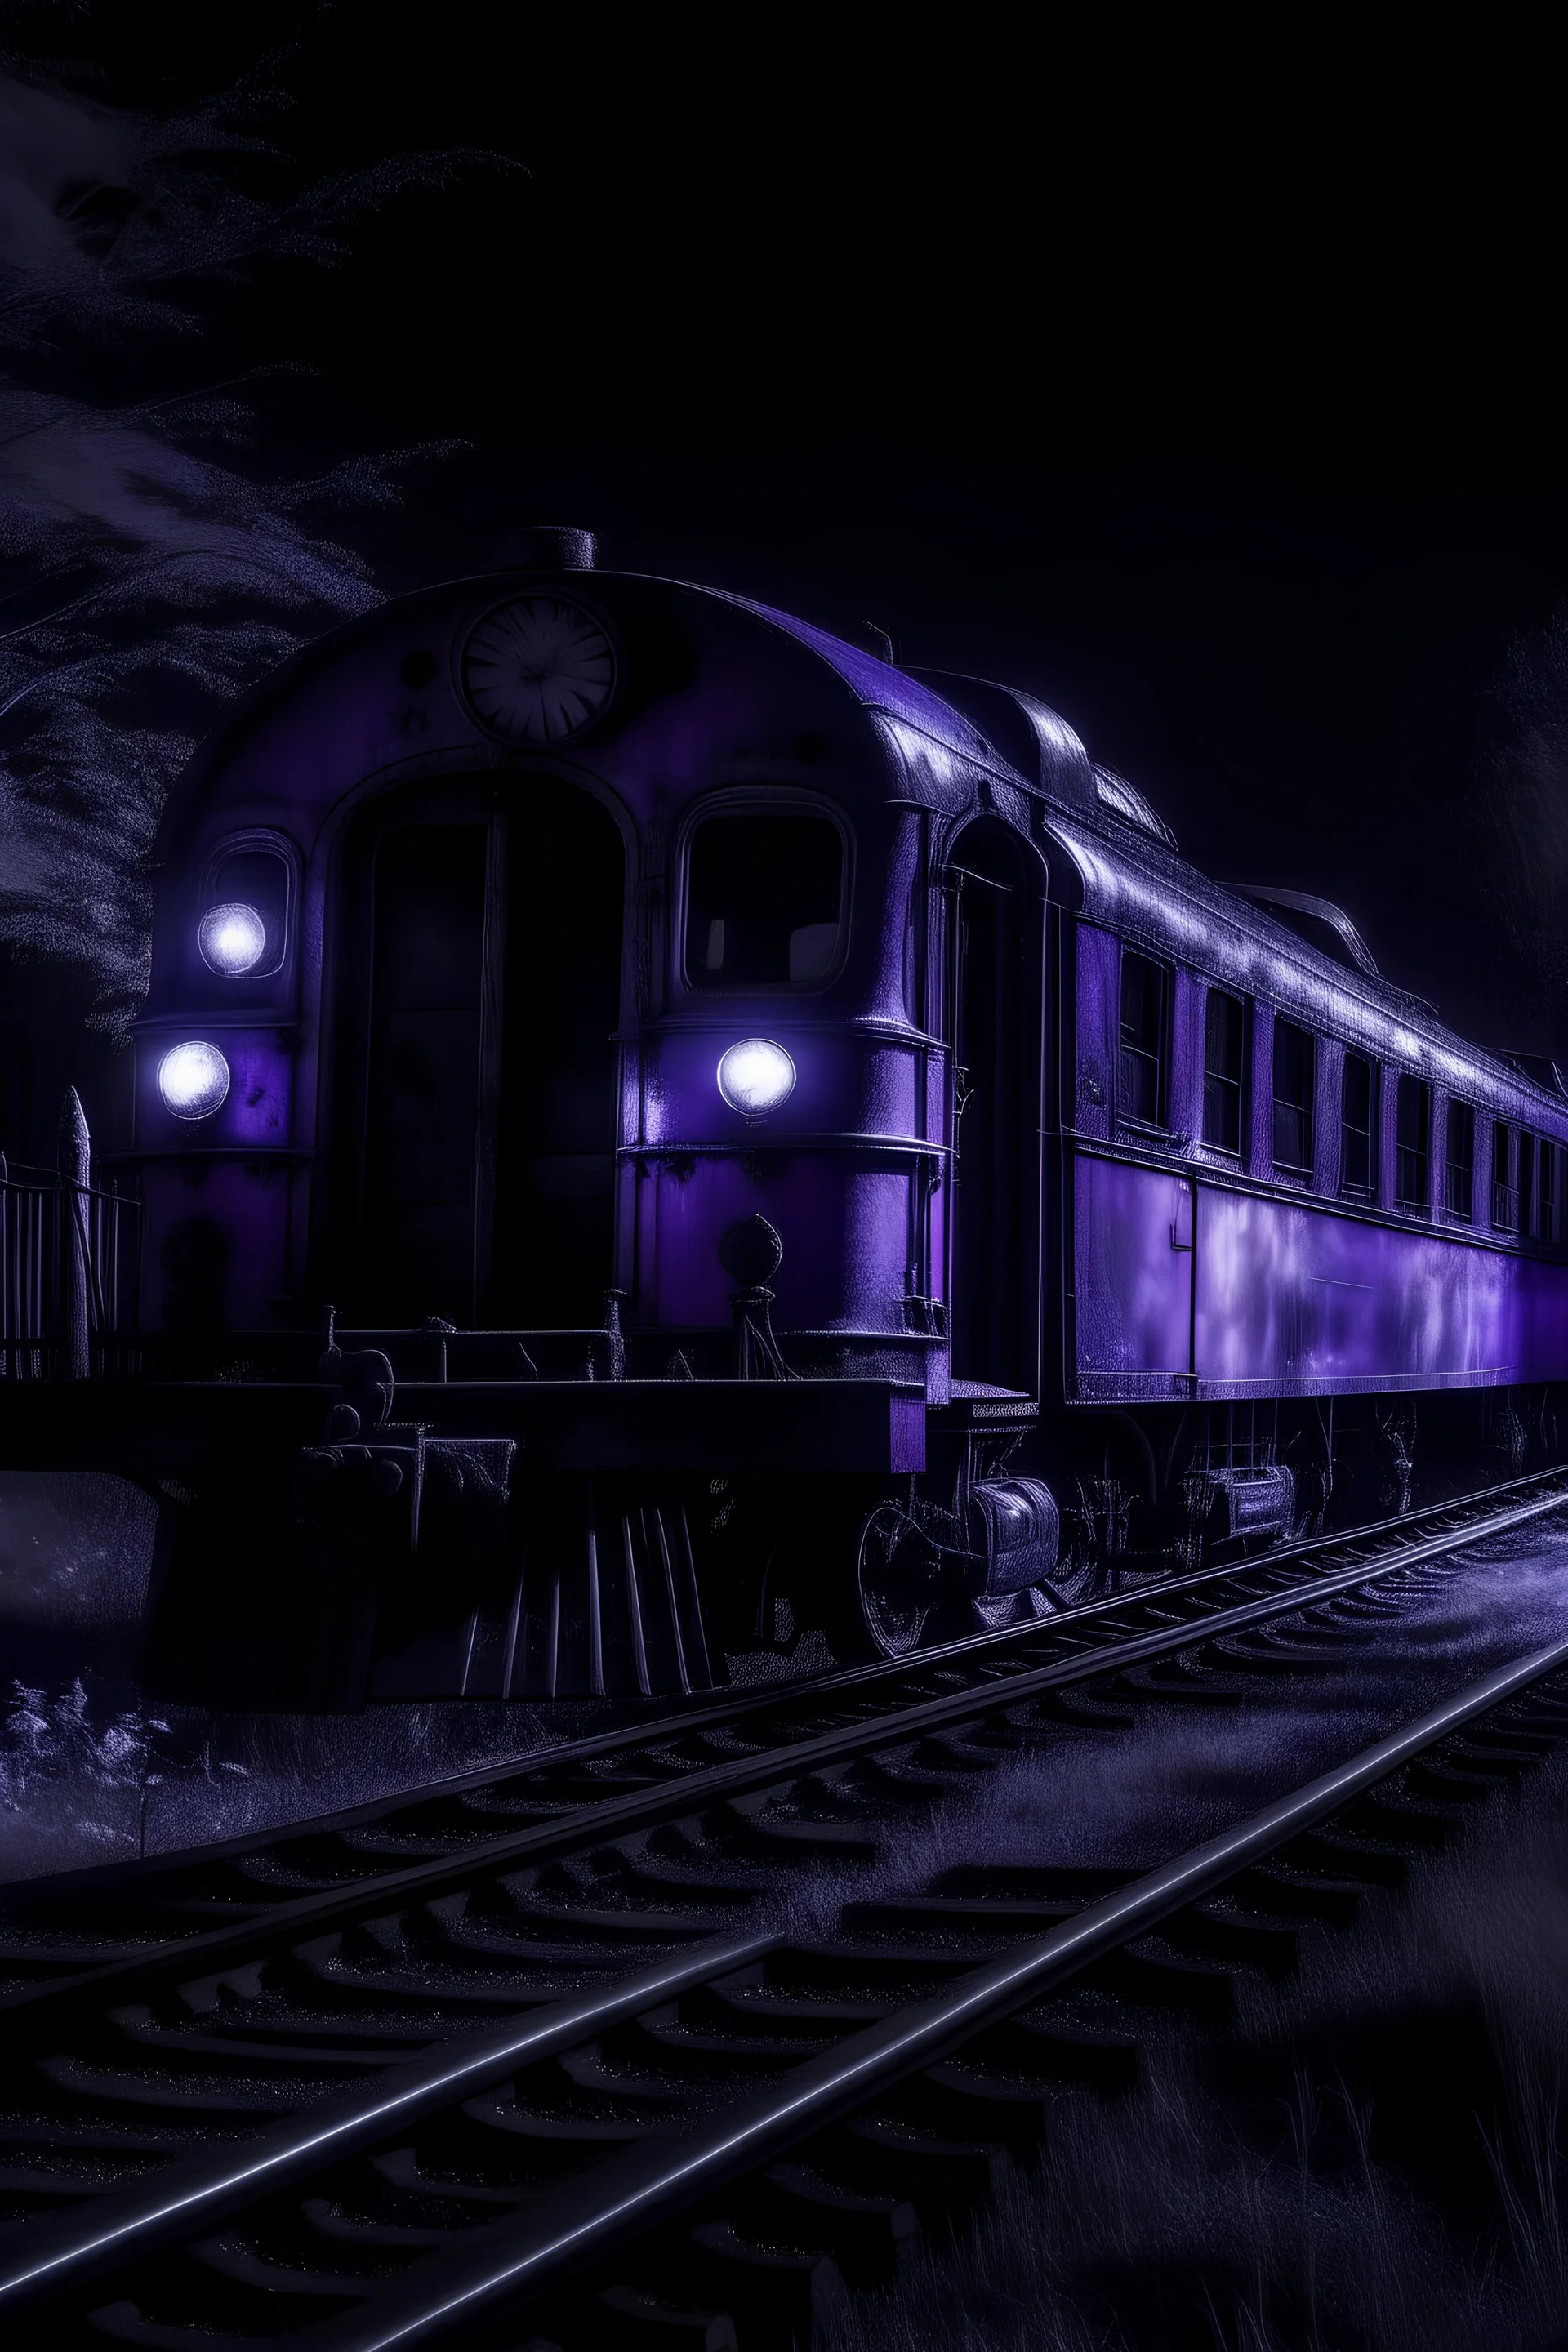 A portrait of a ghost train in a purple night